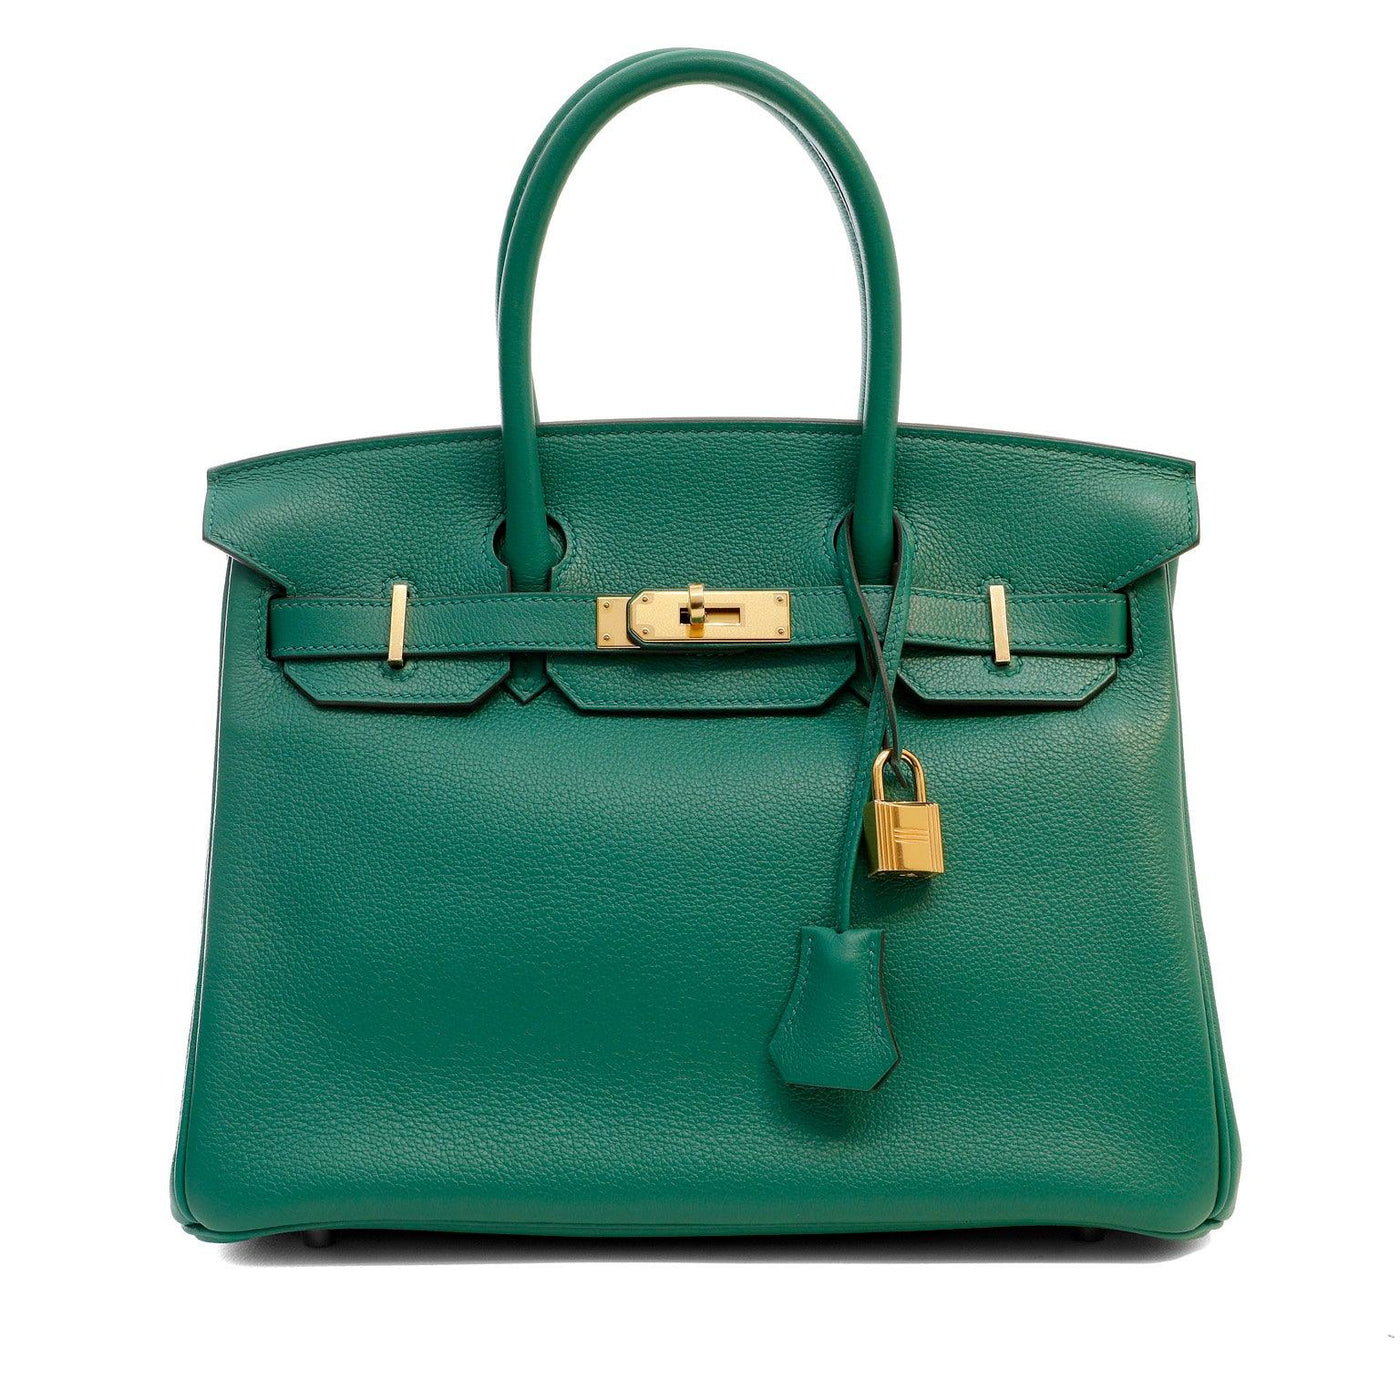 This Emerald Green Evergrain Birkin by Hermès is a magnificent luxury handbag that is in unworn and pristine condition